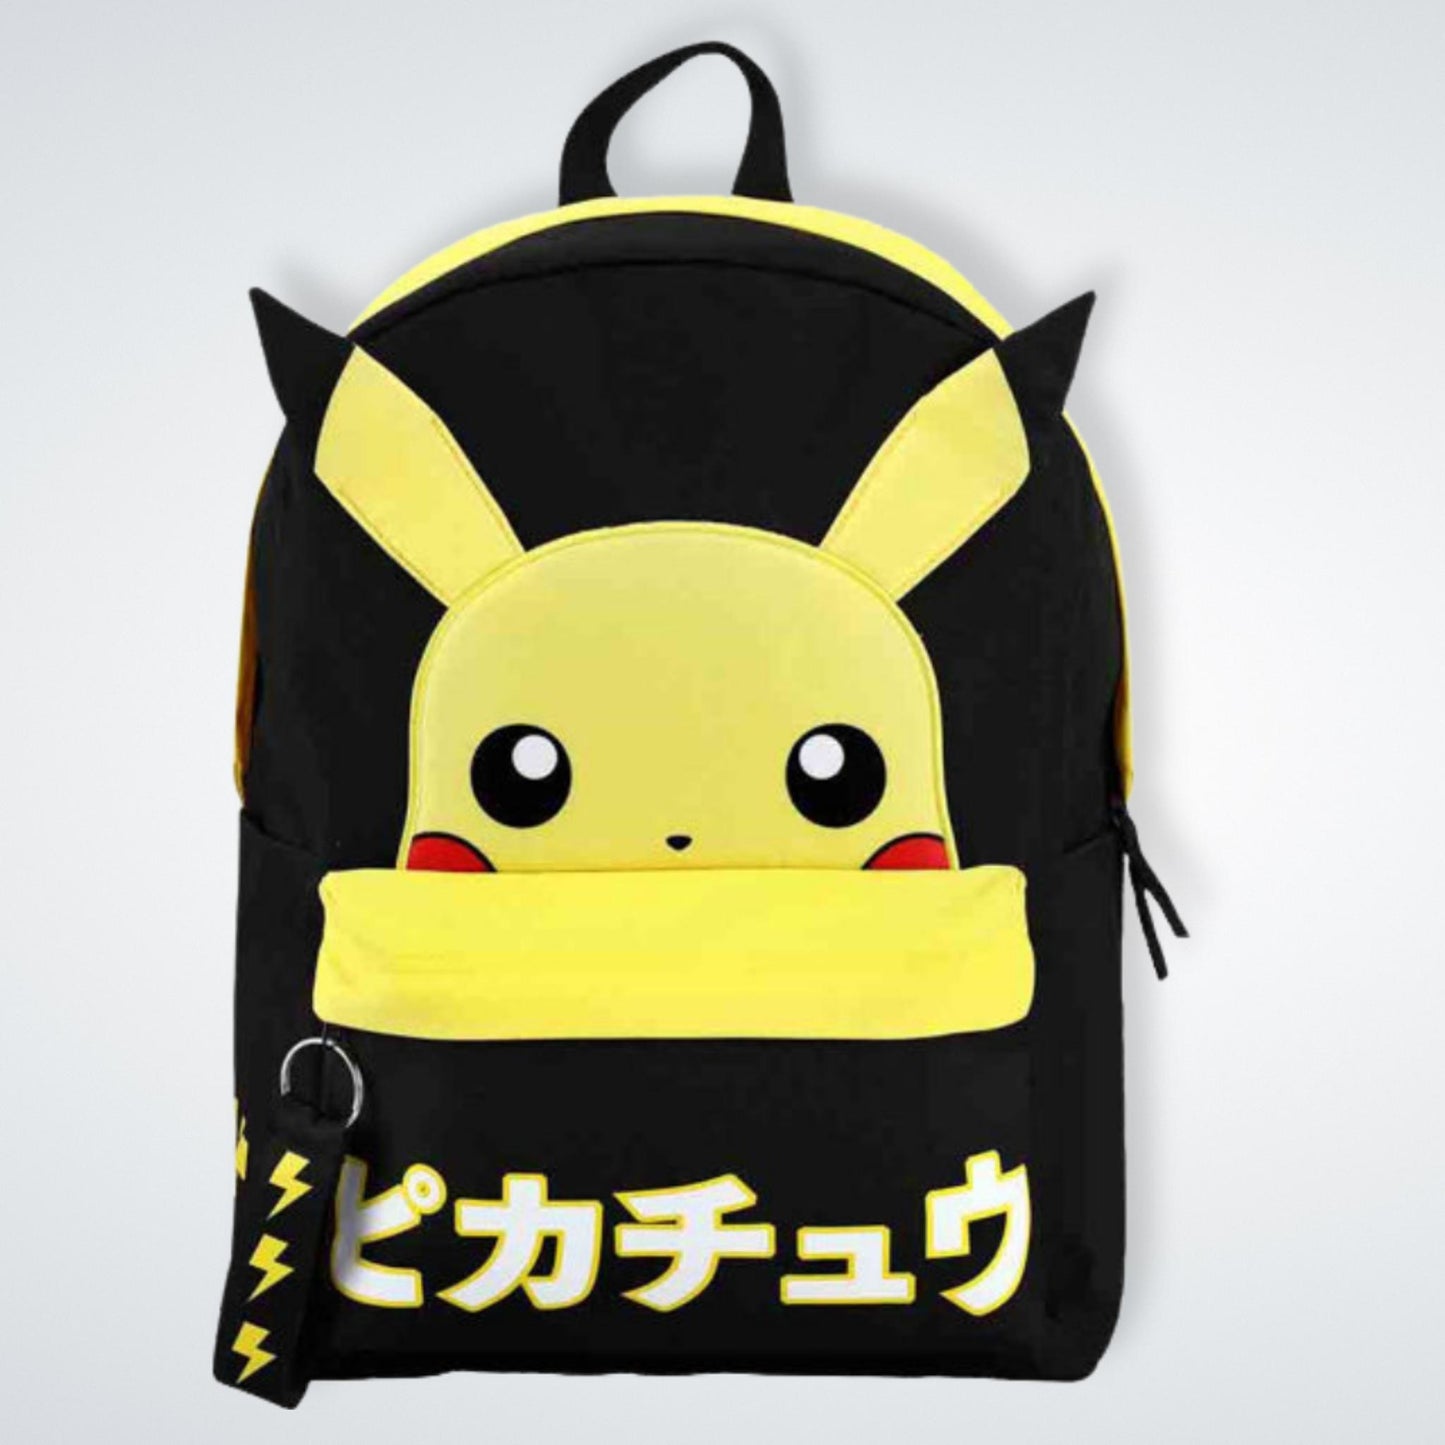 Pikachu Electric Type (Pokemon) Backpack